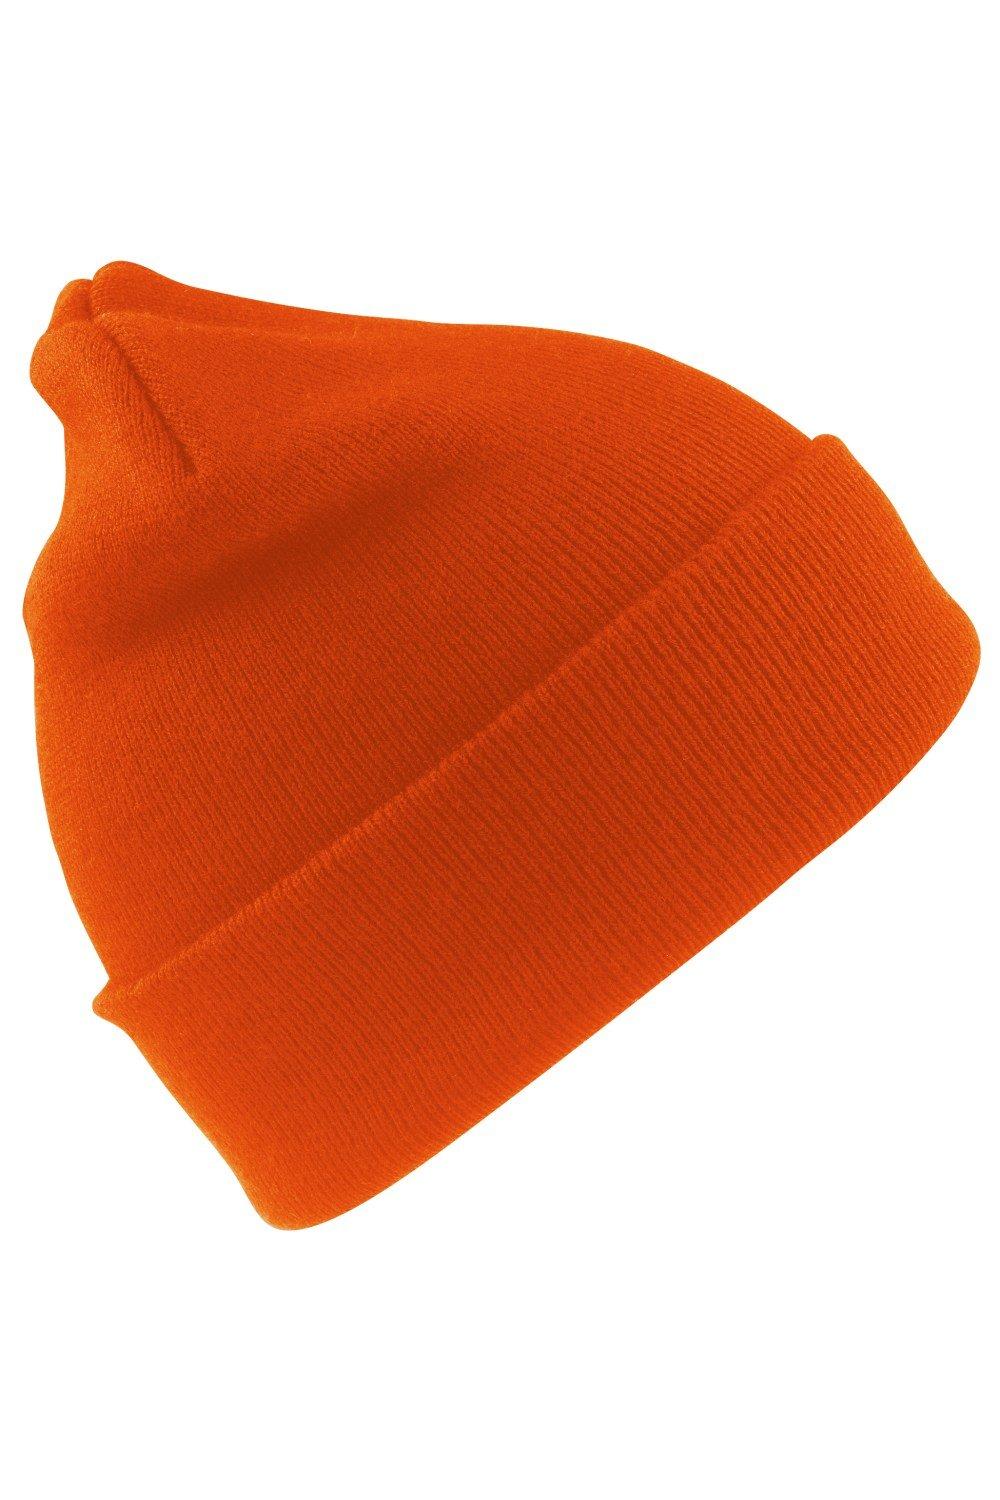 Шерстяная термолыжная/зимняя шапка с утеплителем Thinsulate 3M Result, оранжевый пряжа семеновская пряжа kable 30005 перванш 5 шт по 100 г